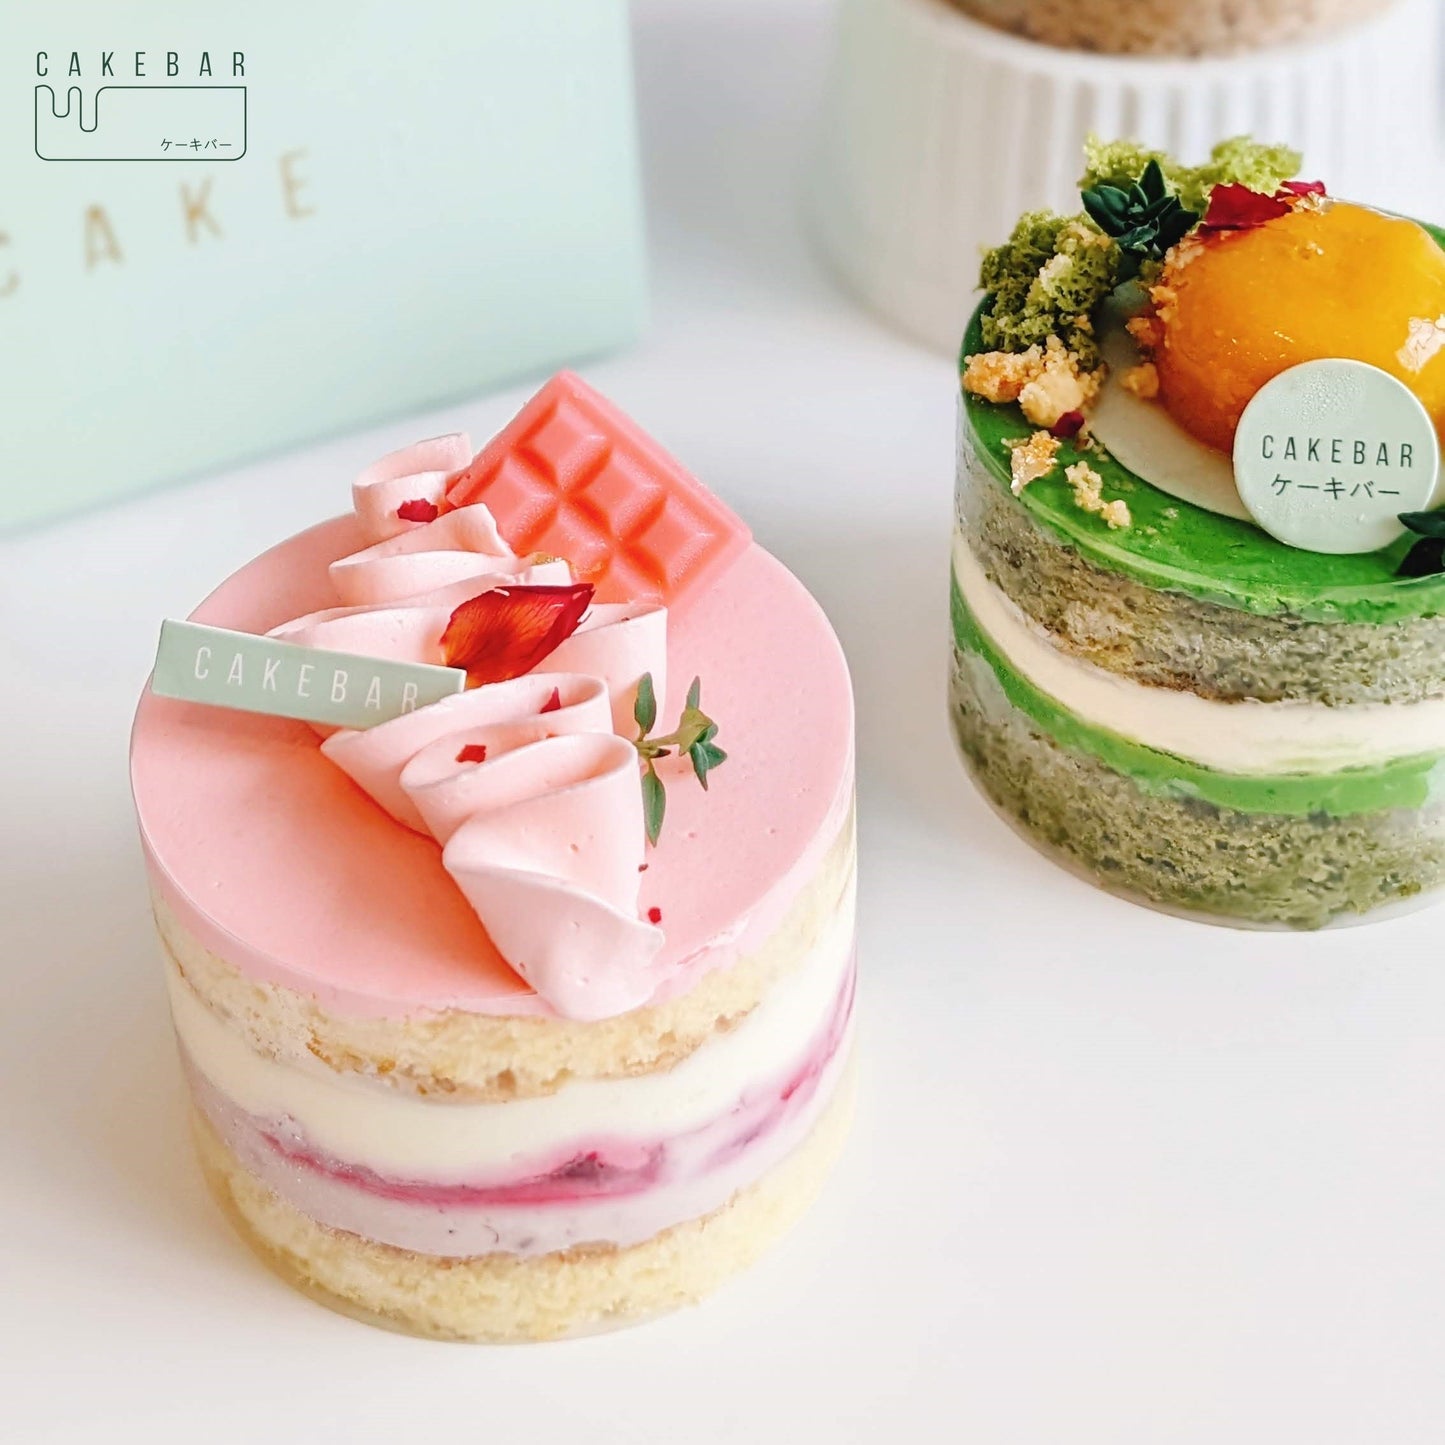 Joie de Pastry Gift | Mix & Match 4 Single Cakes Box